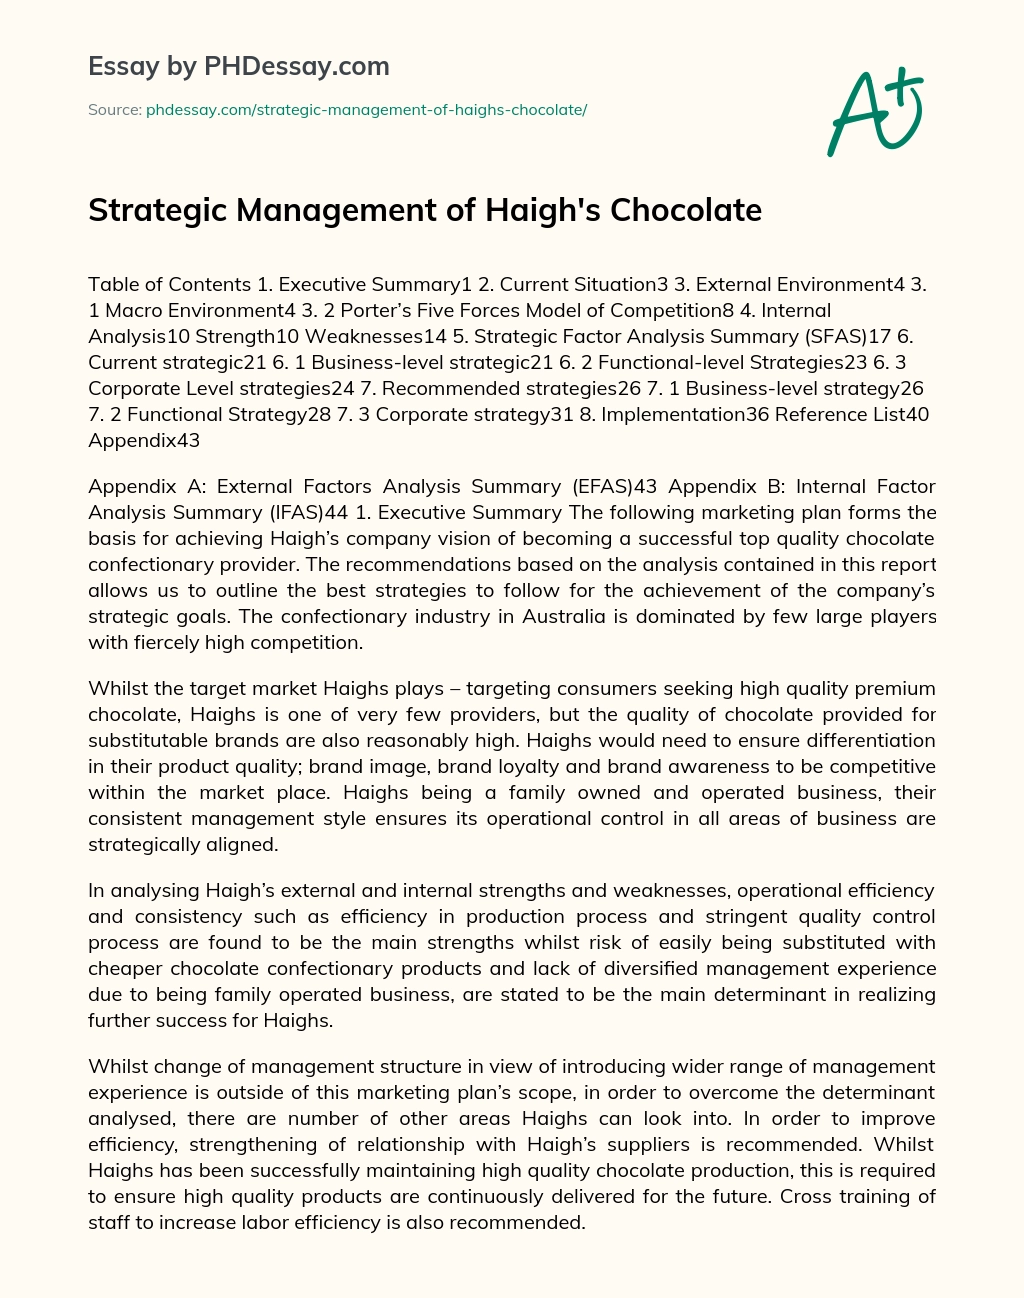 Strategic Management of Haigh’s Chocolate essay